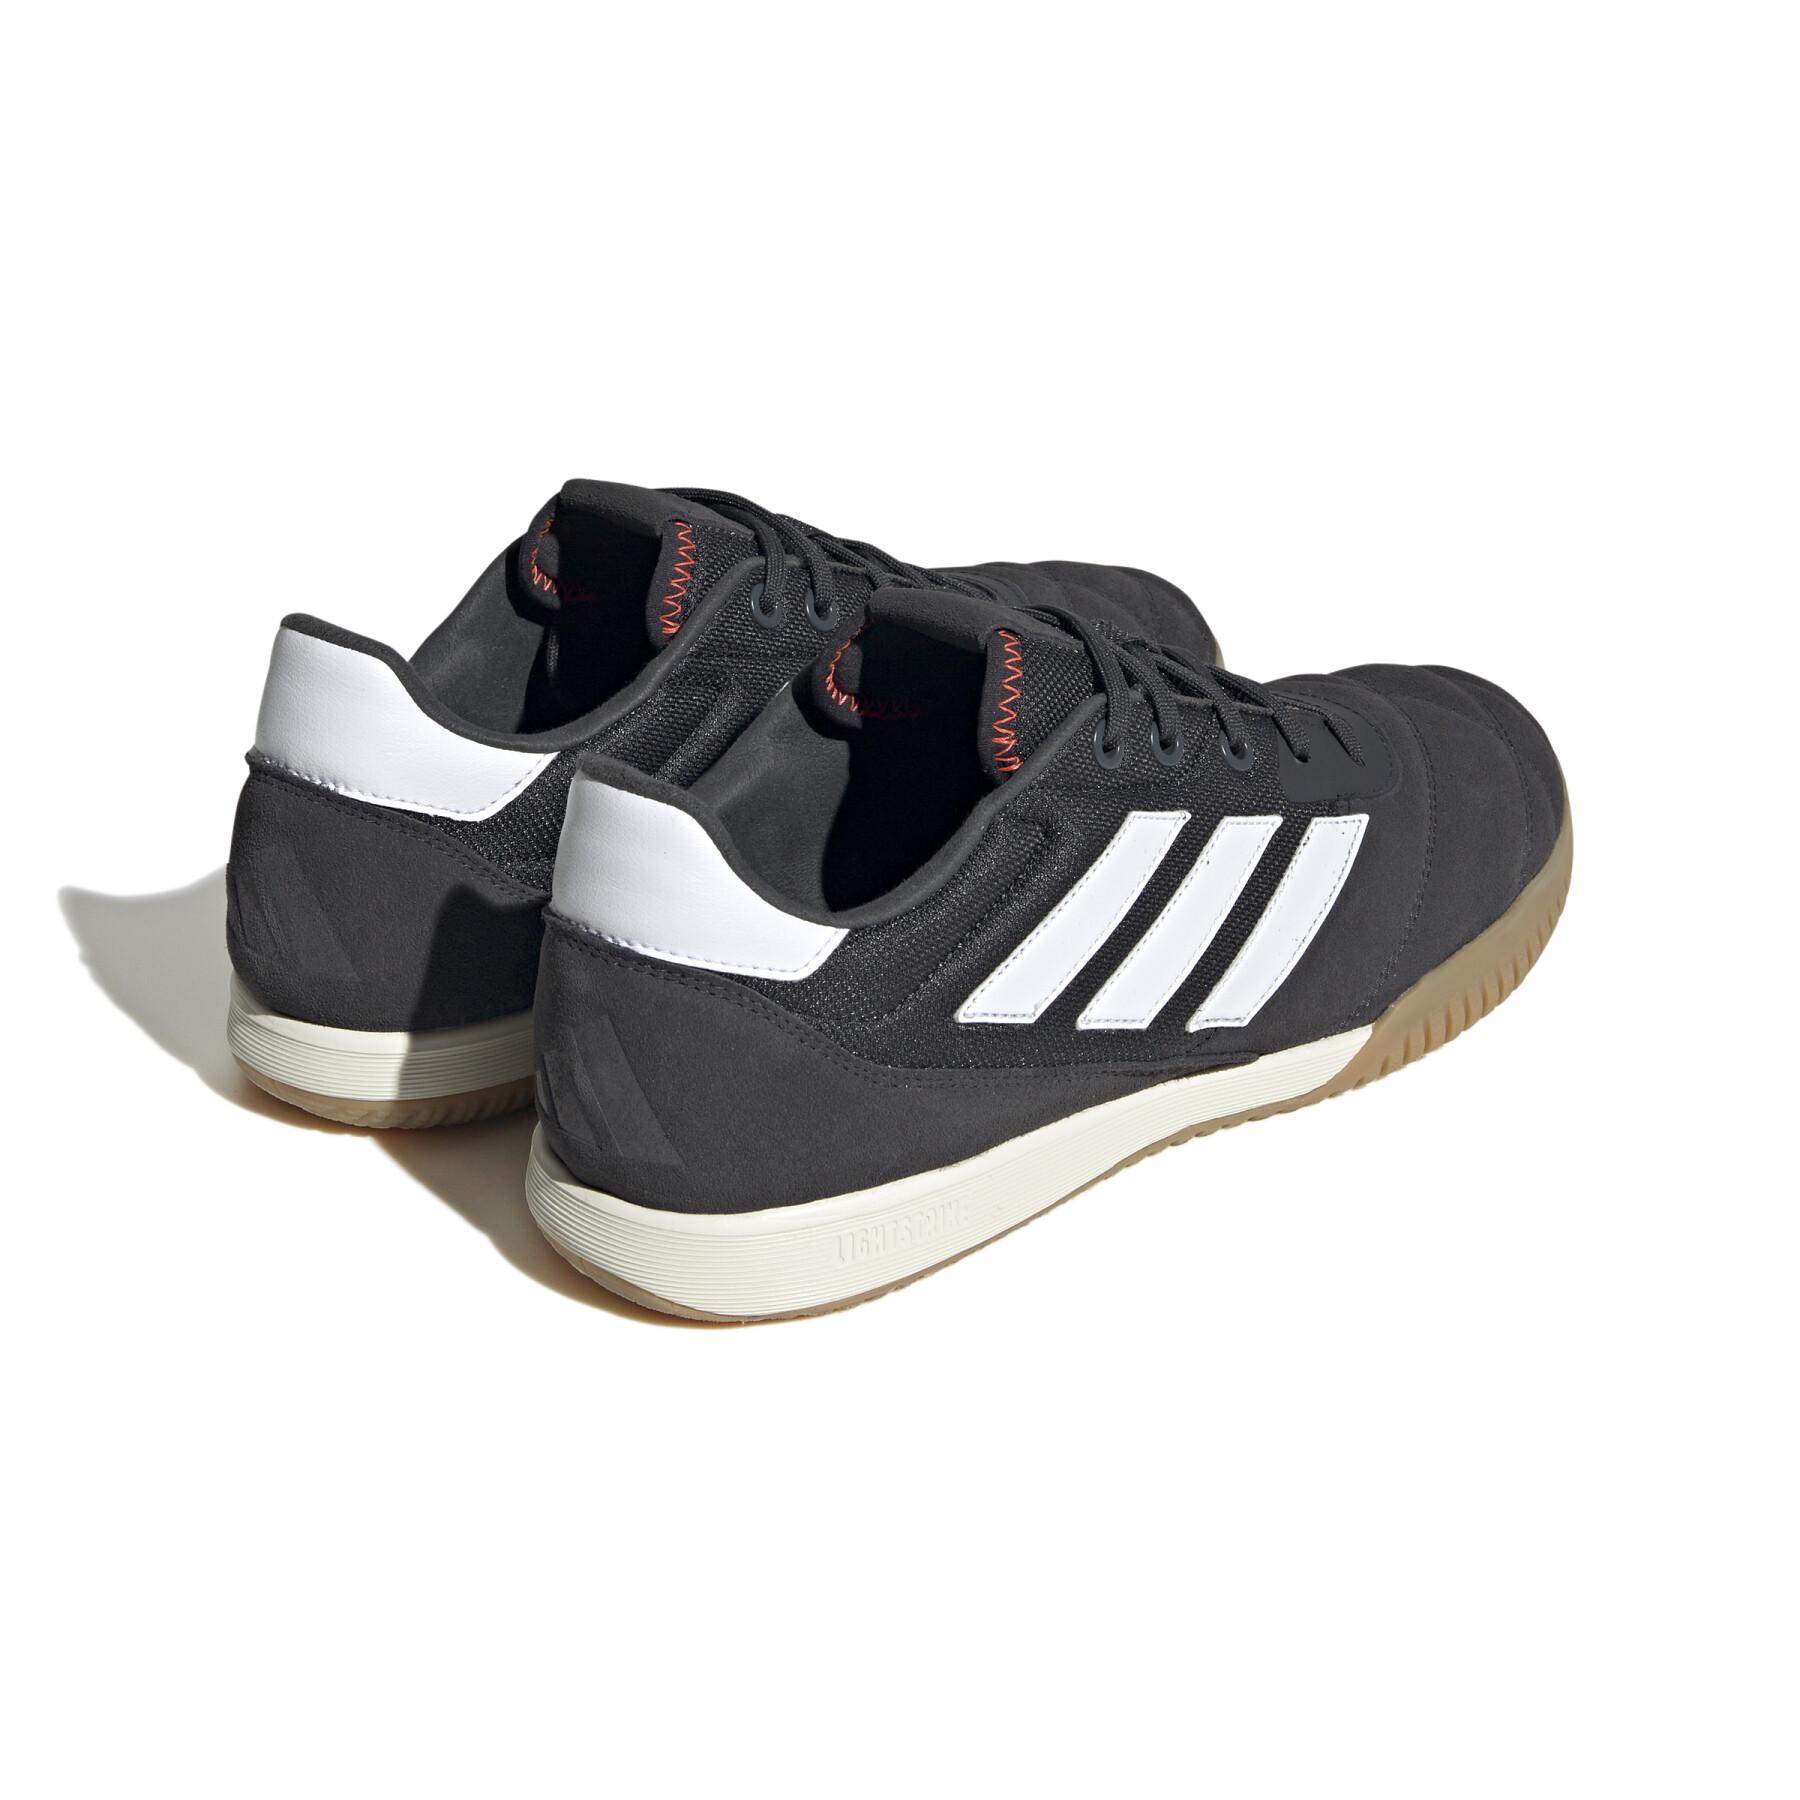 Indoor soccer shoes adidas Copa Gloro